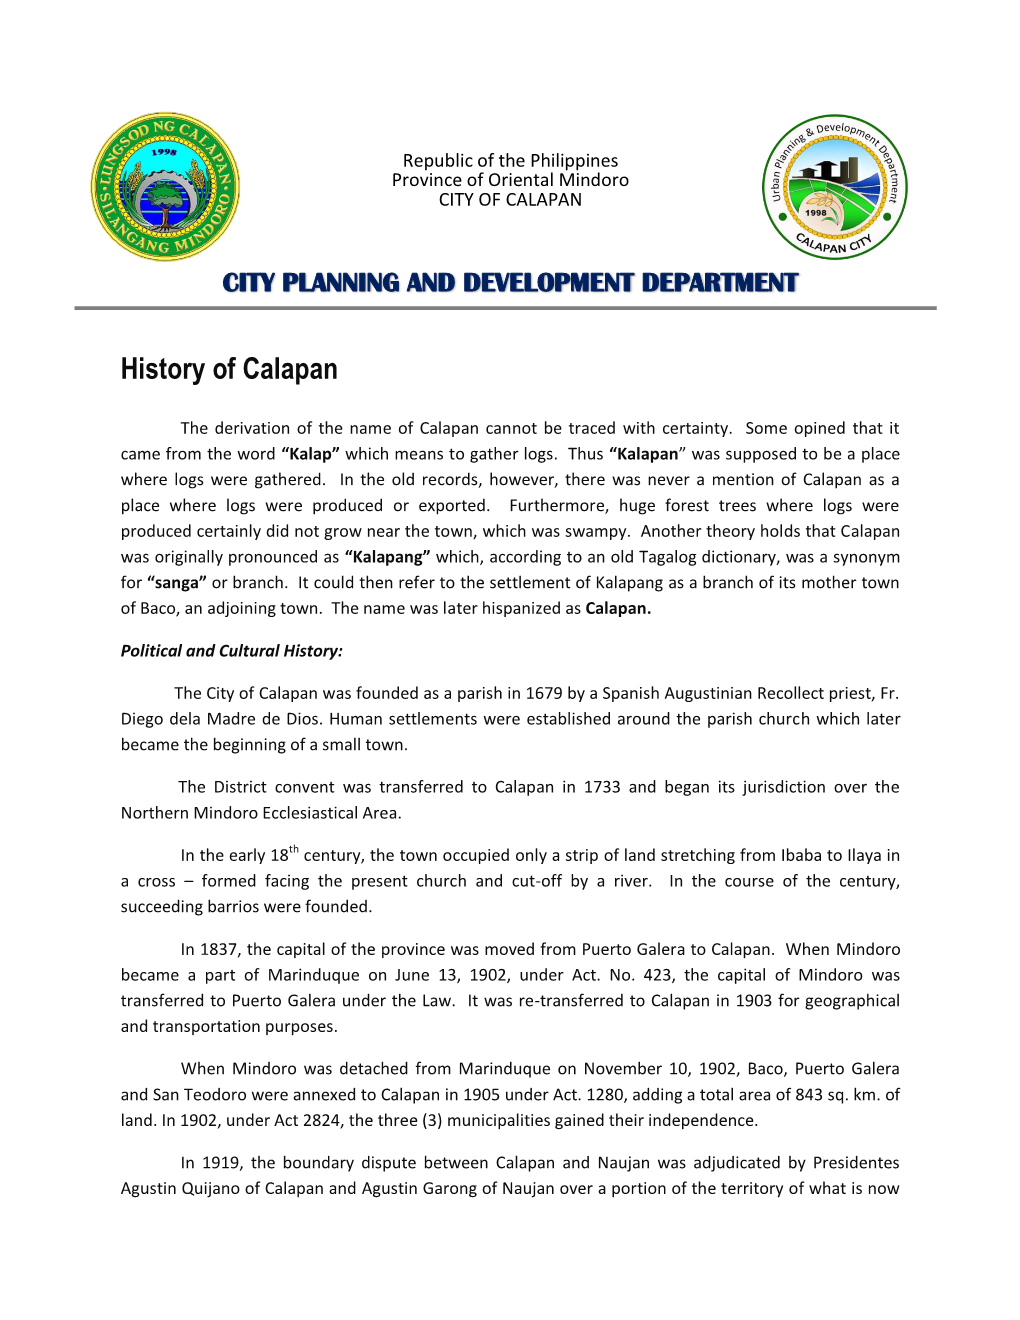 History of Calapan